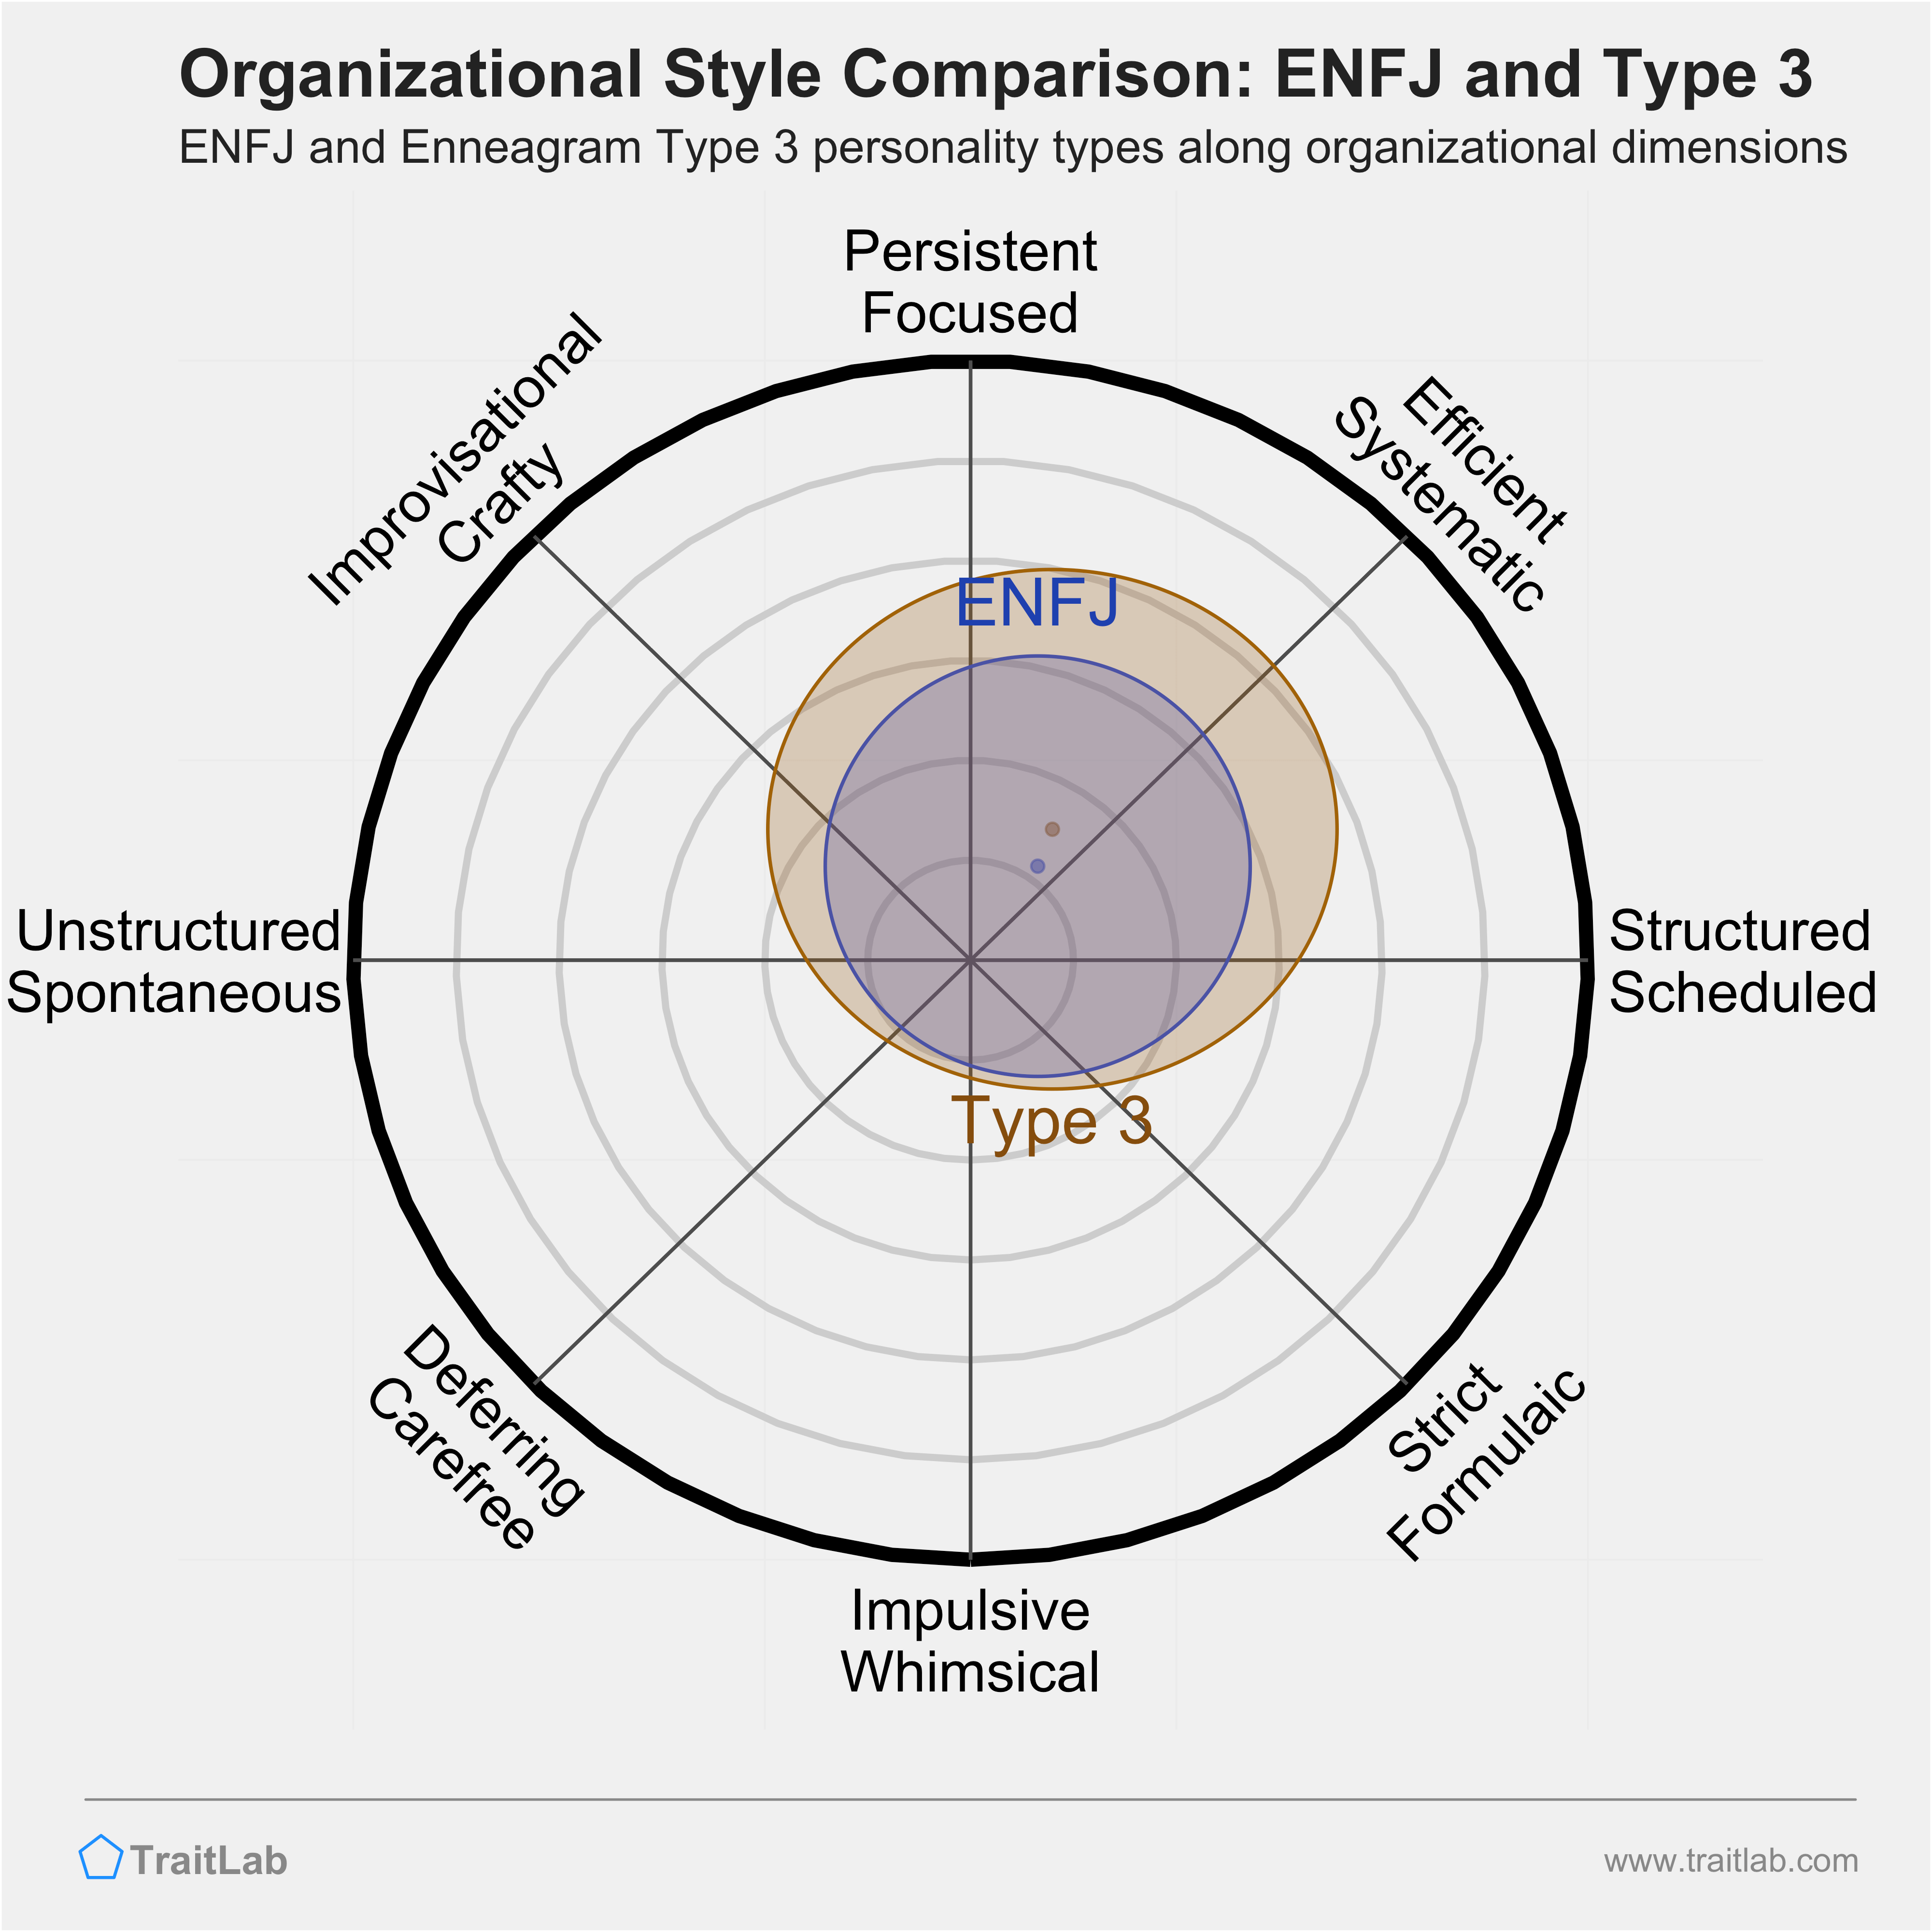 ENFJ and Type 3 comparison across organizational dimensions